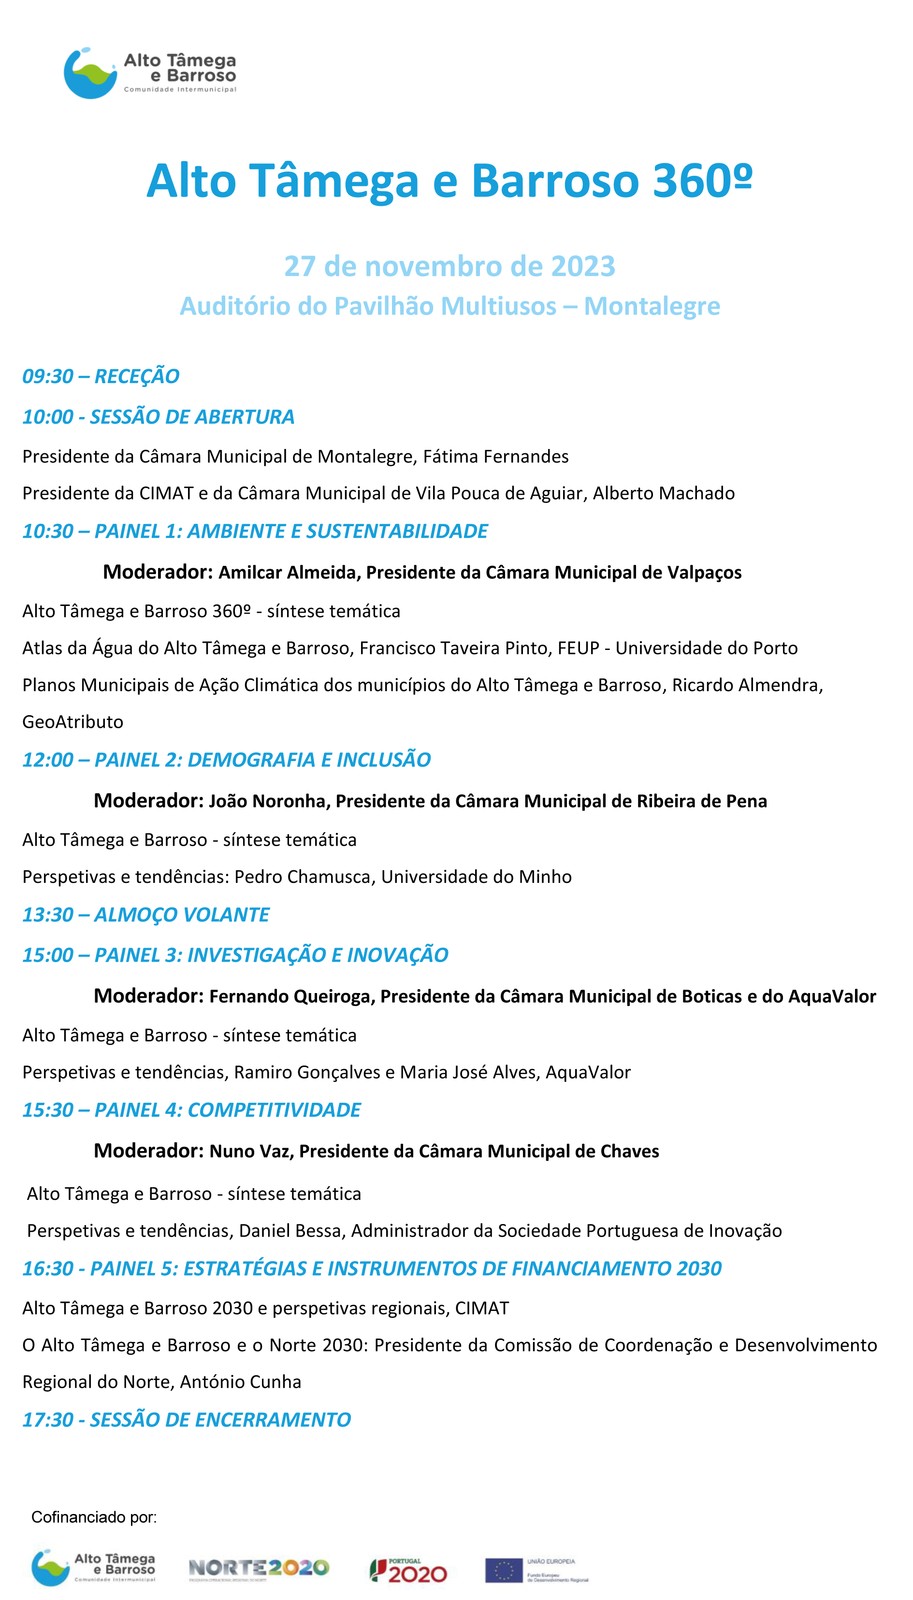 MONTALEGRE - Alto Tâmega e Barroso 360º (Programa - 27 novembro 2023)